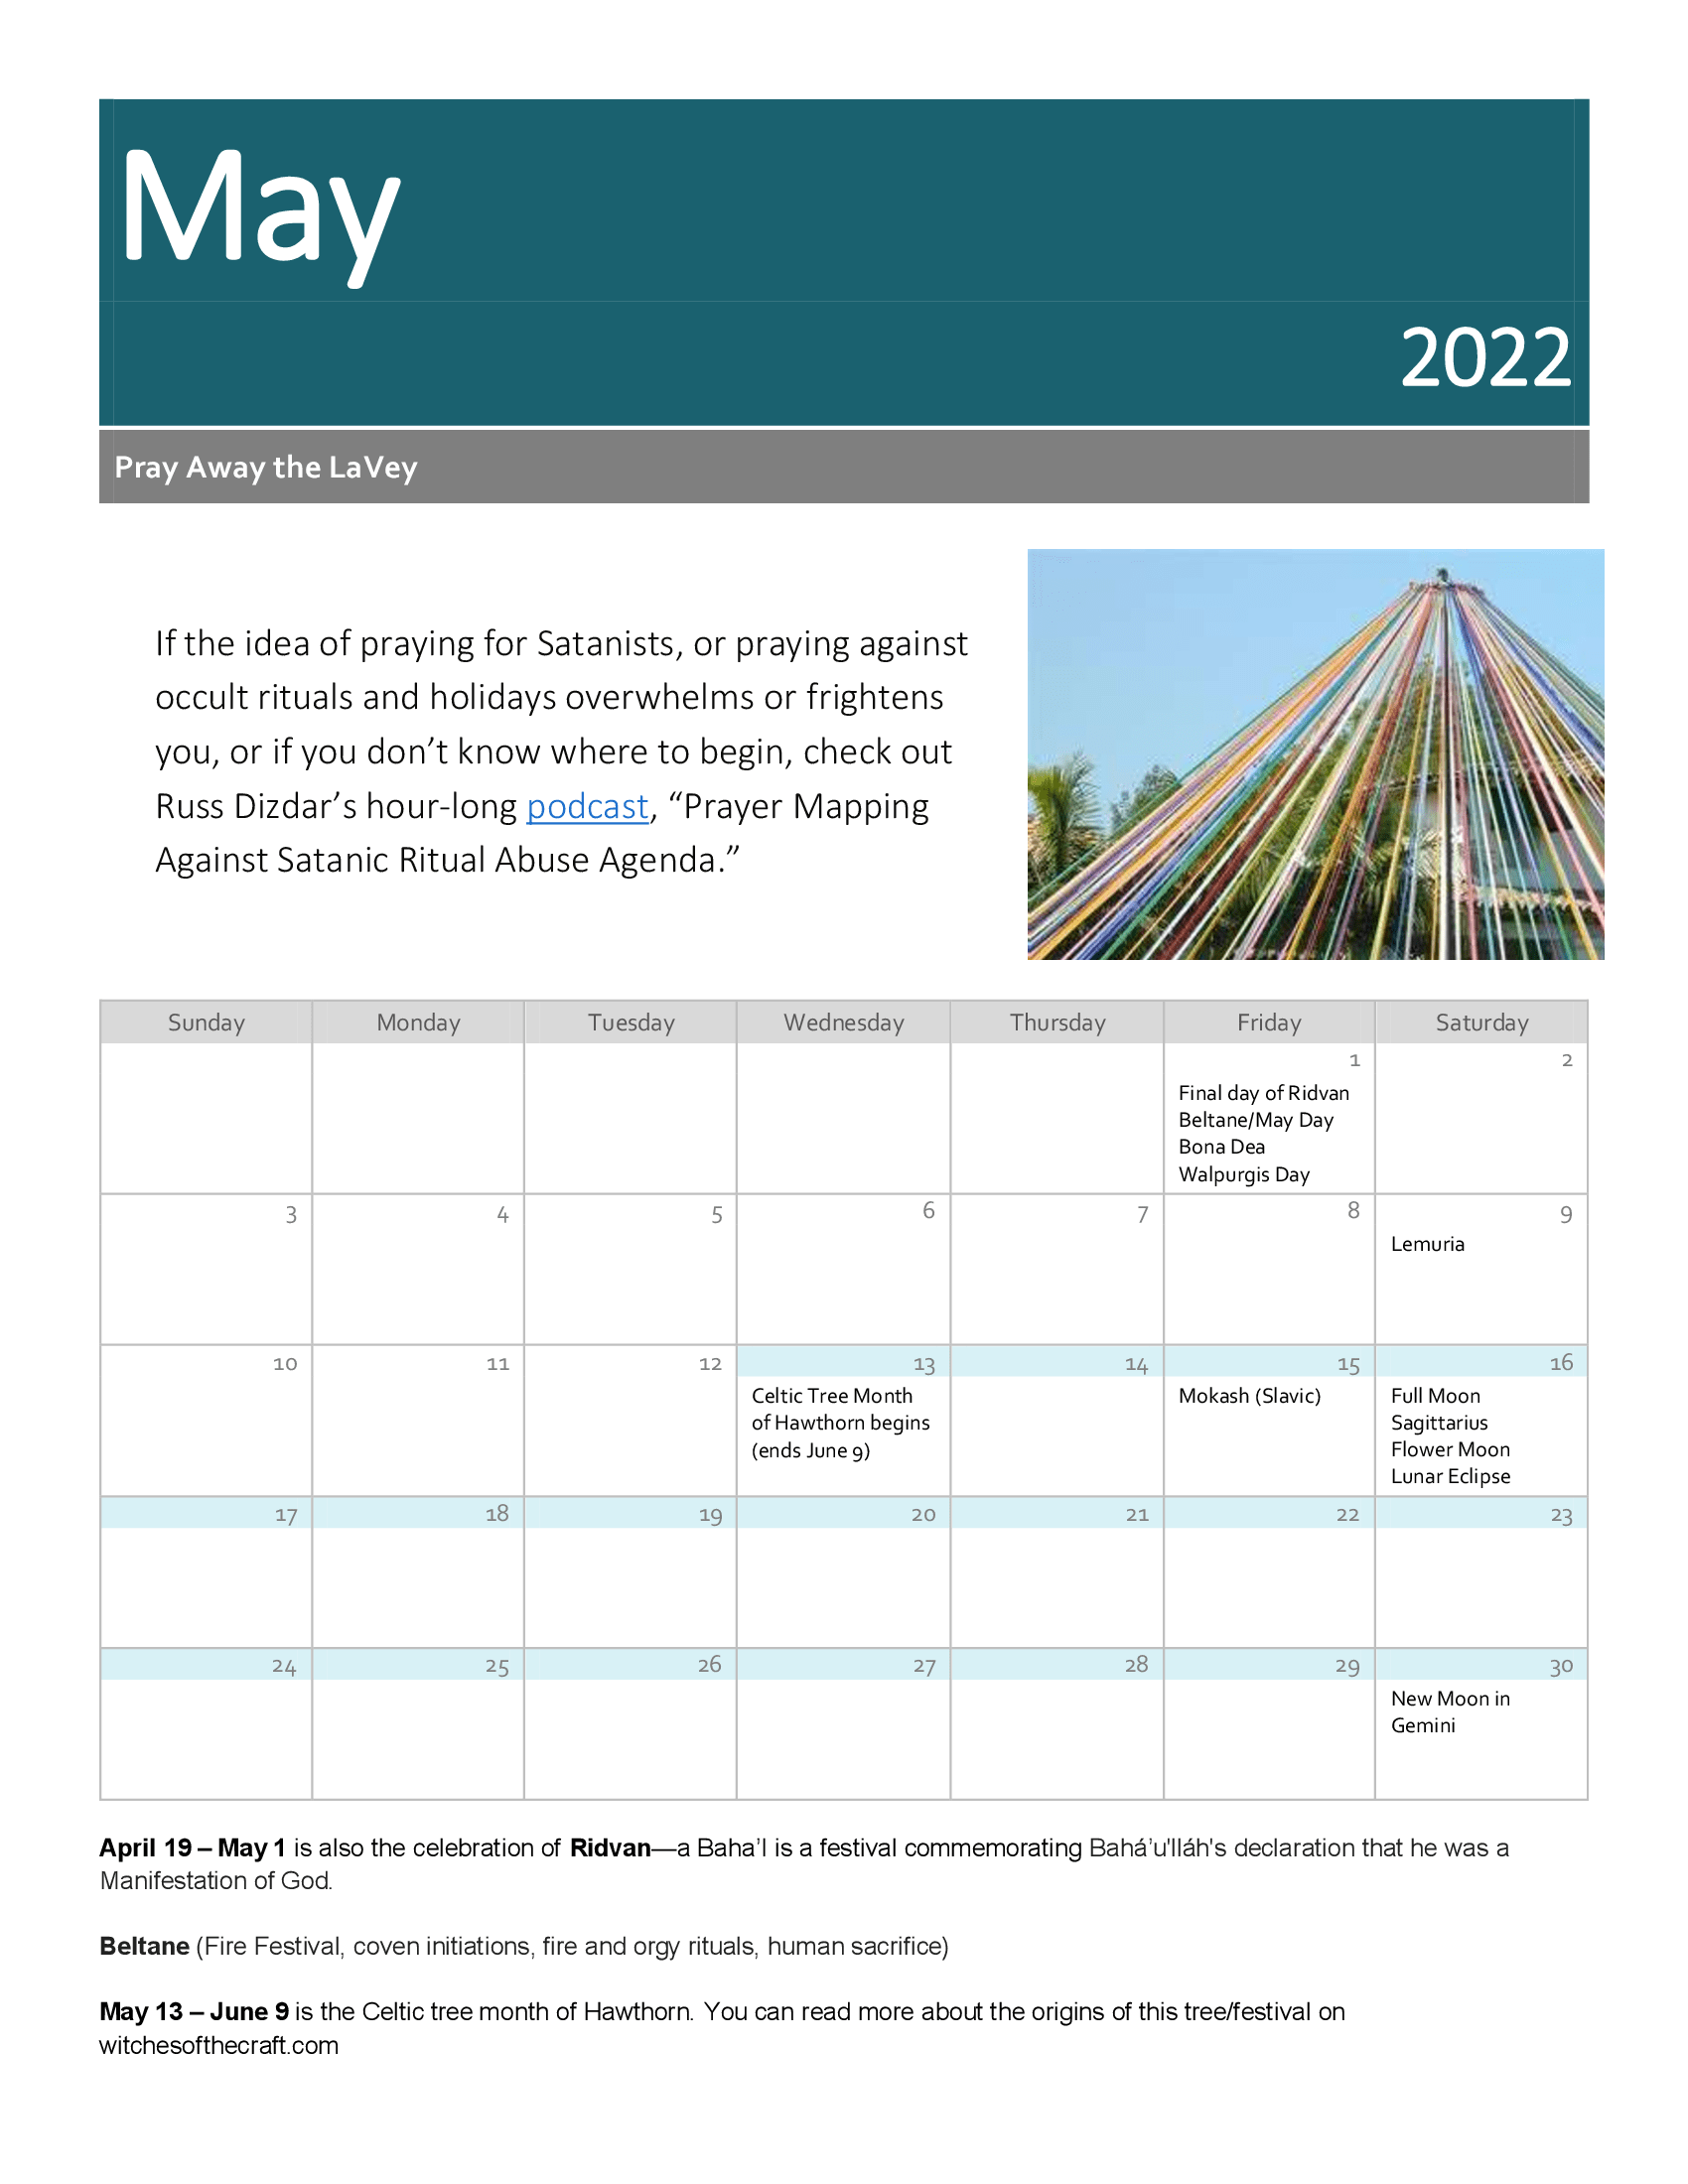 Pray Away the LaVey_May 2022